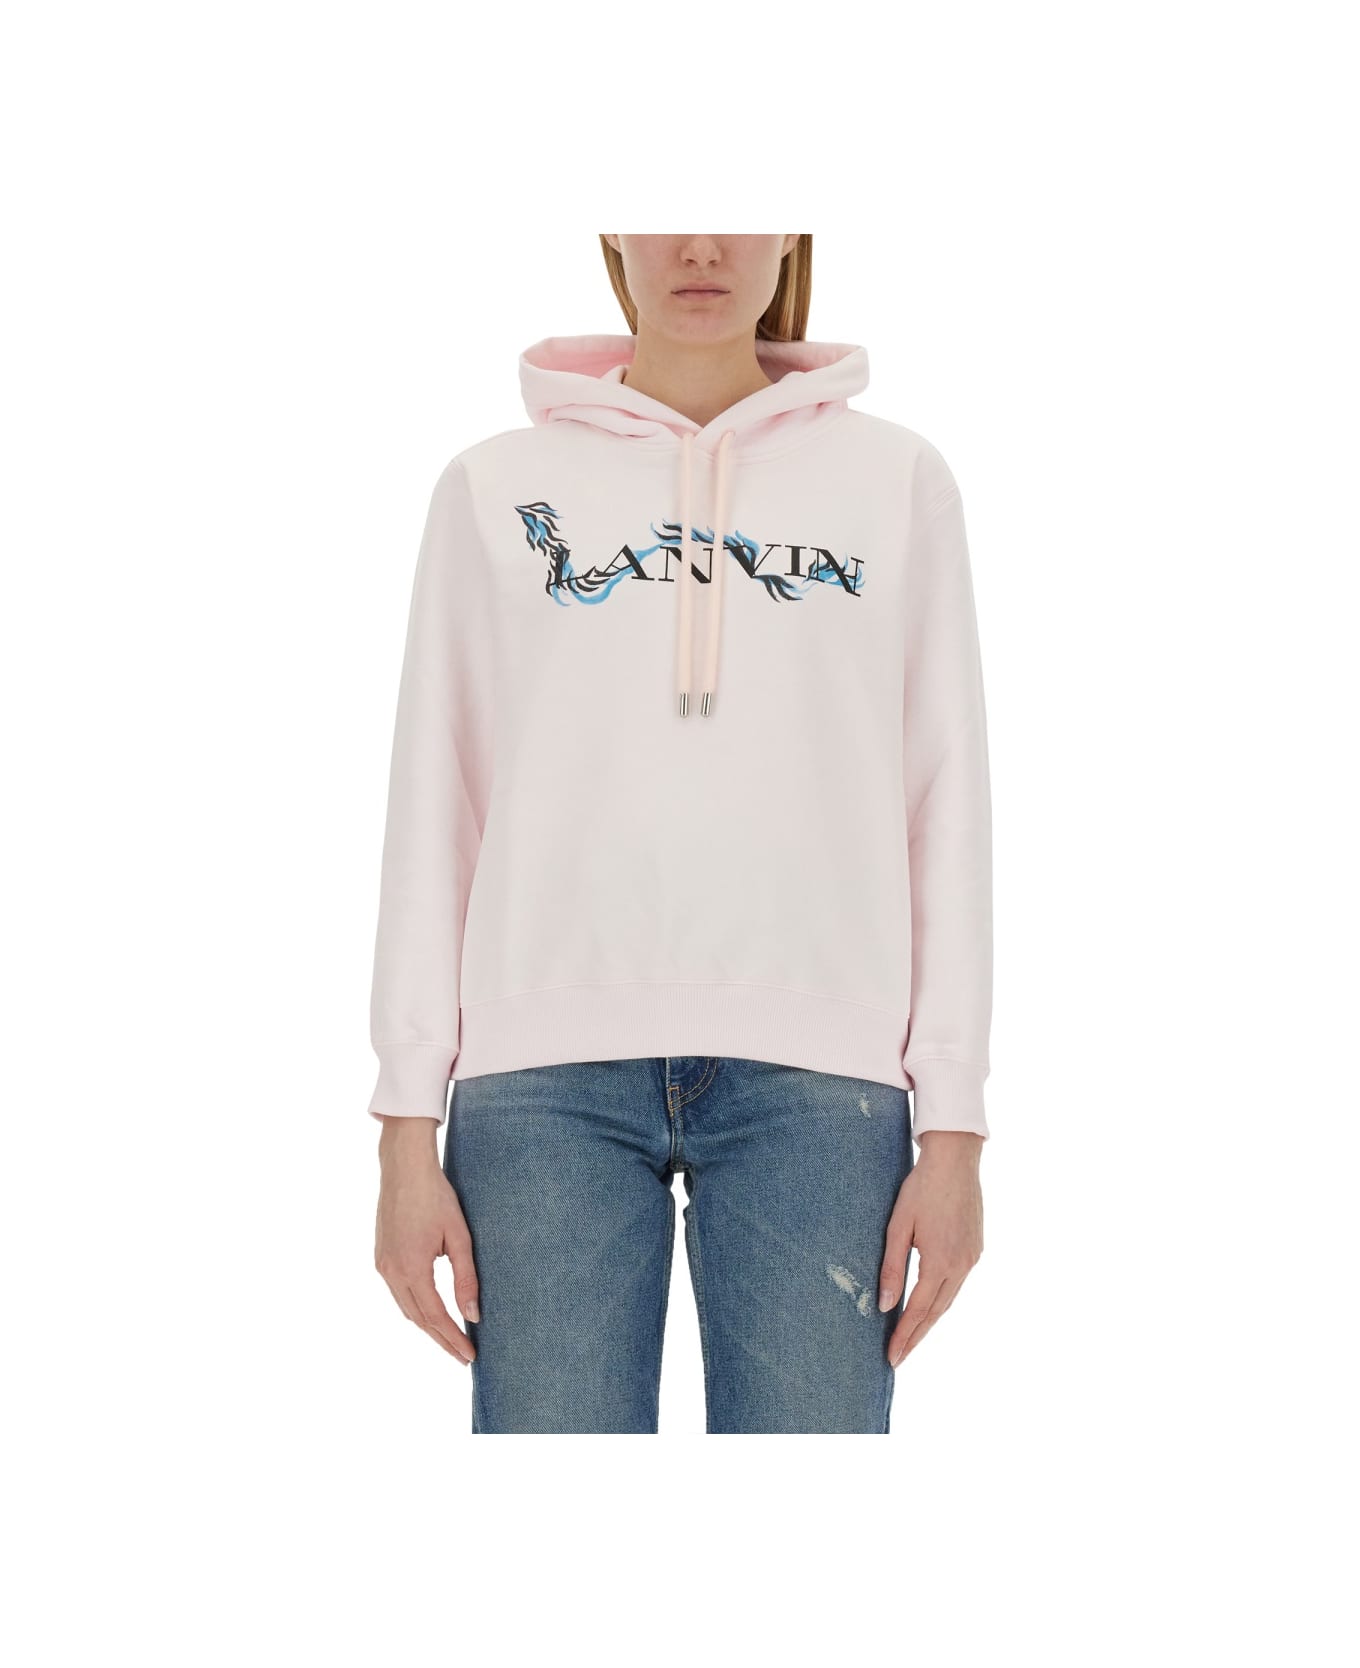 Lanvin Sweatshirt With Print - PINK